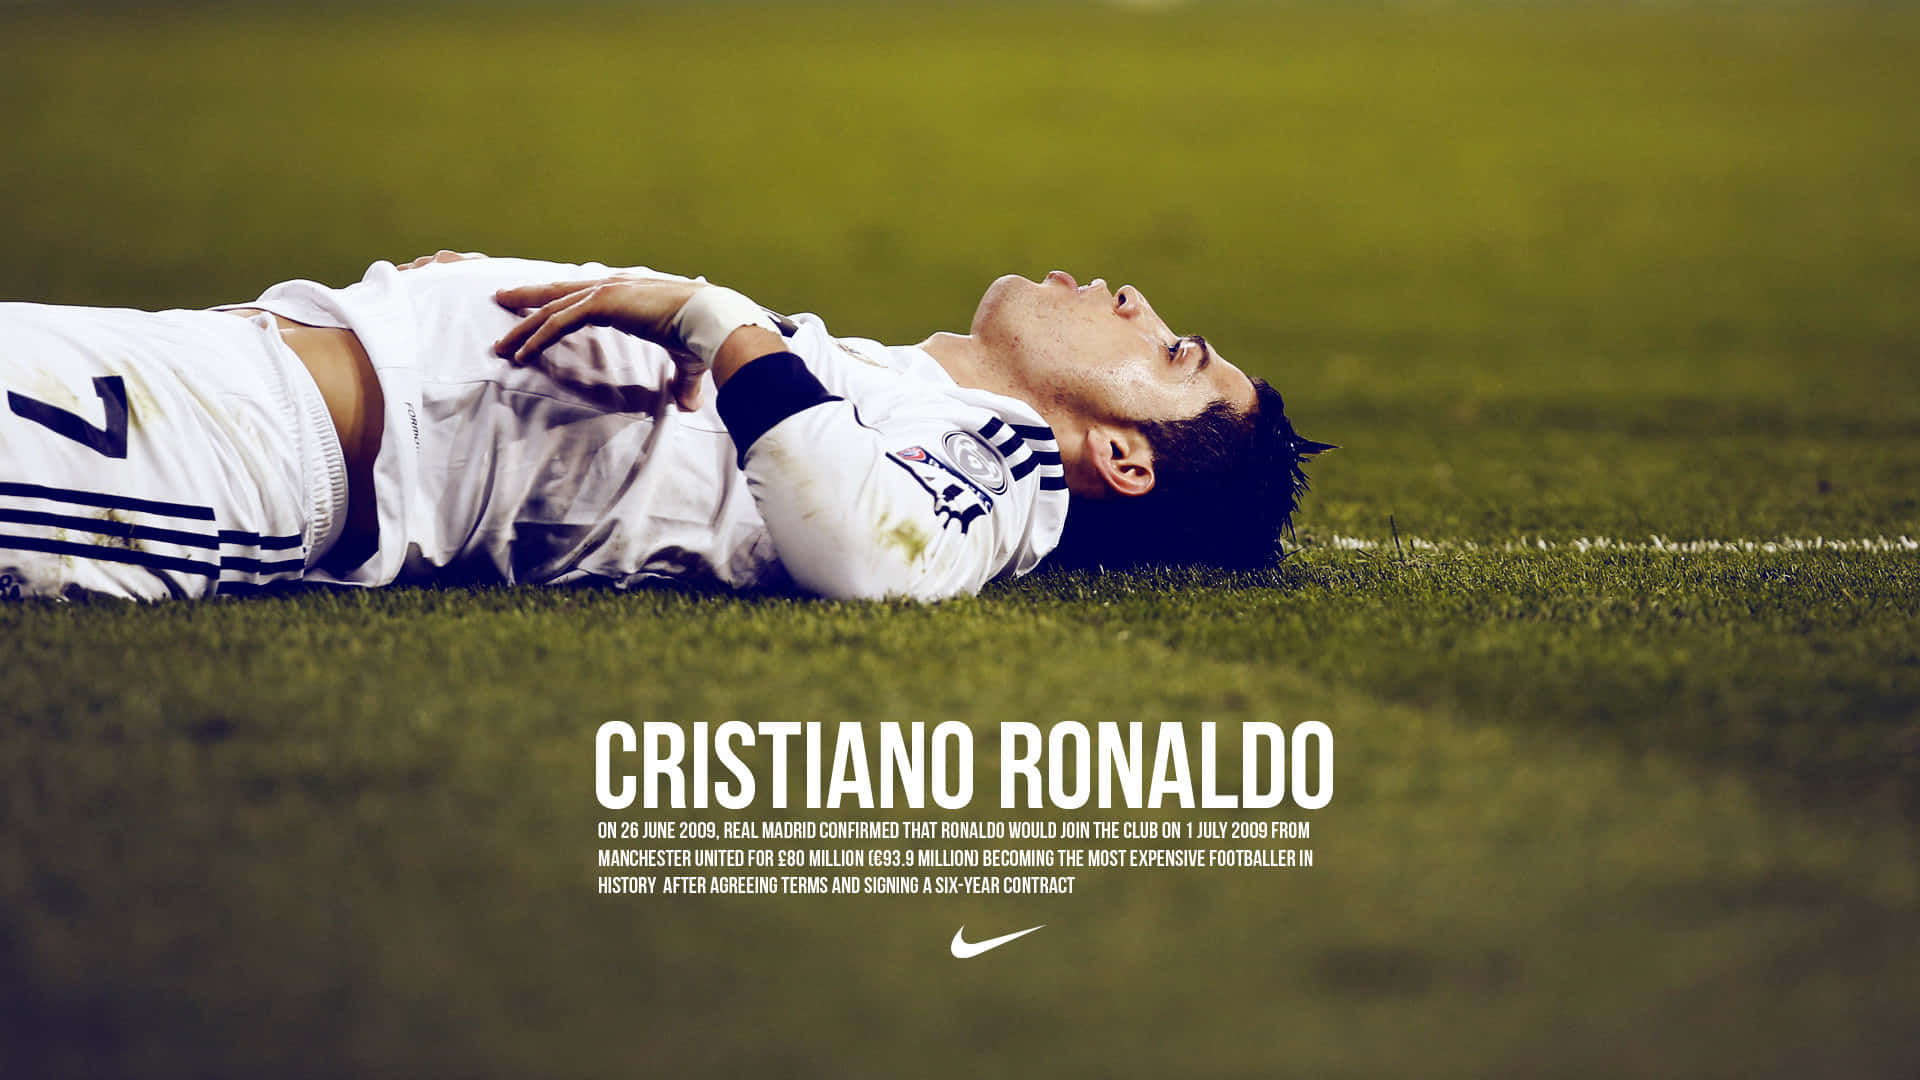 Cristiano Ronaldo Fodbold Billeder